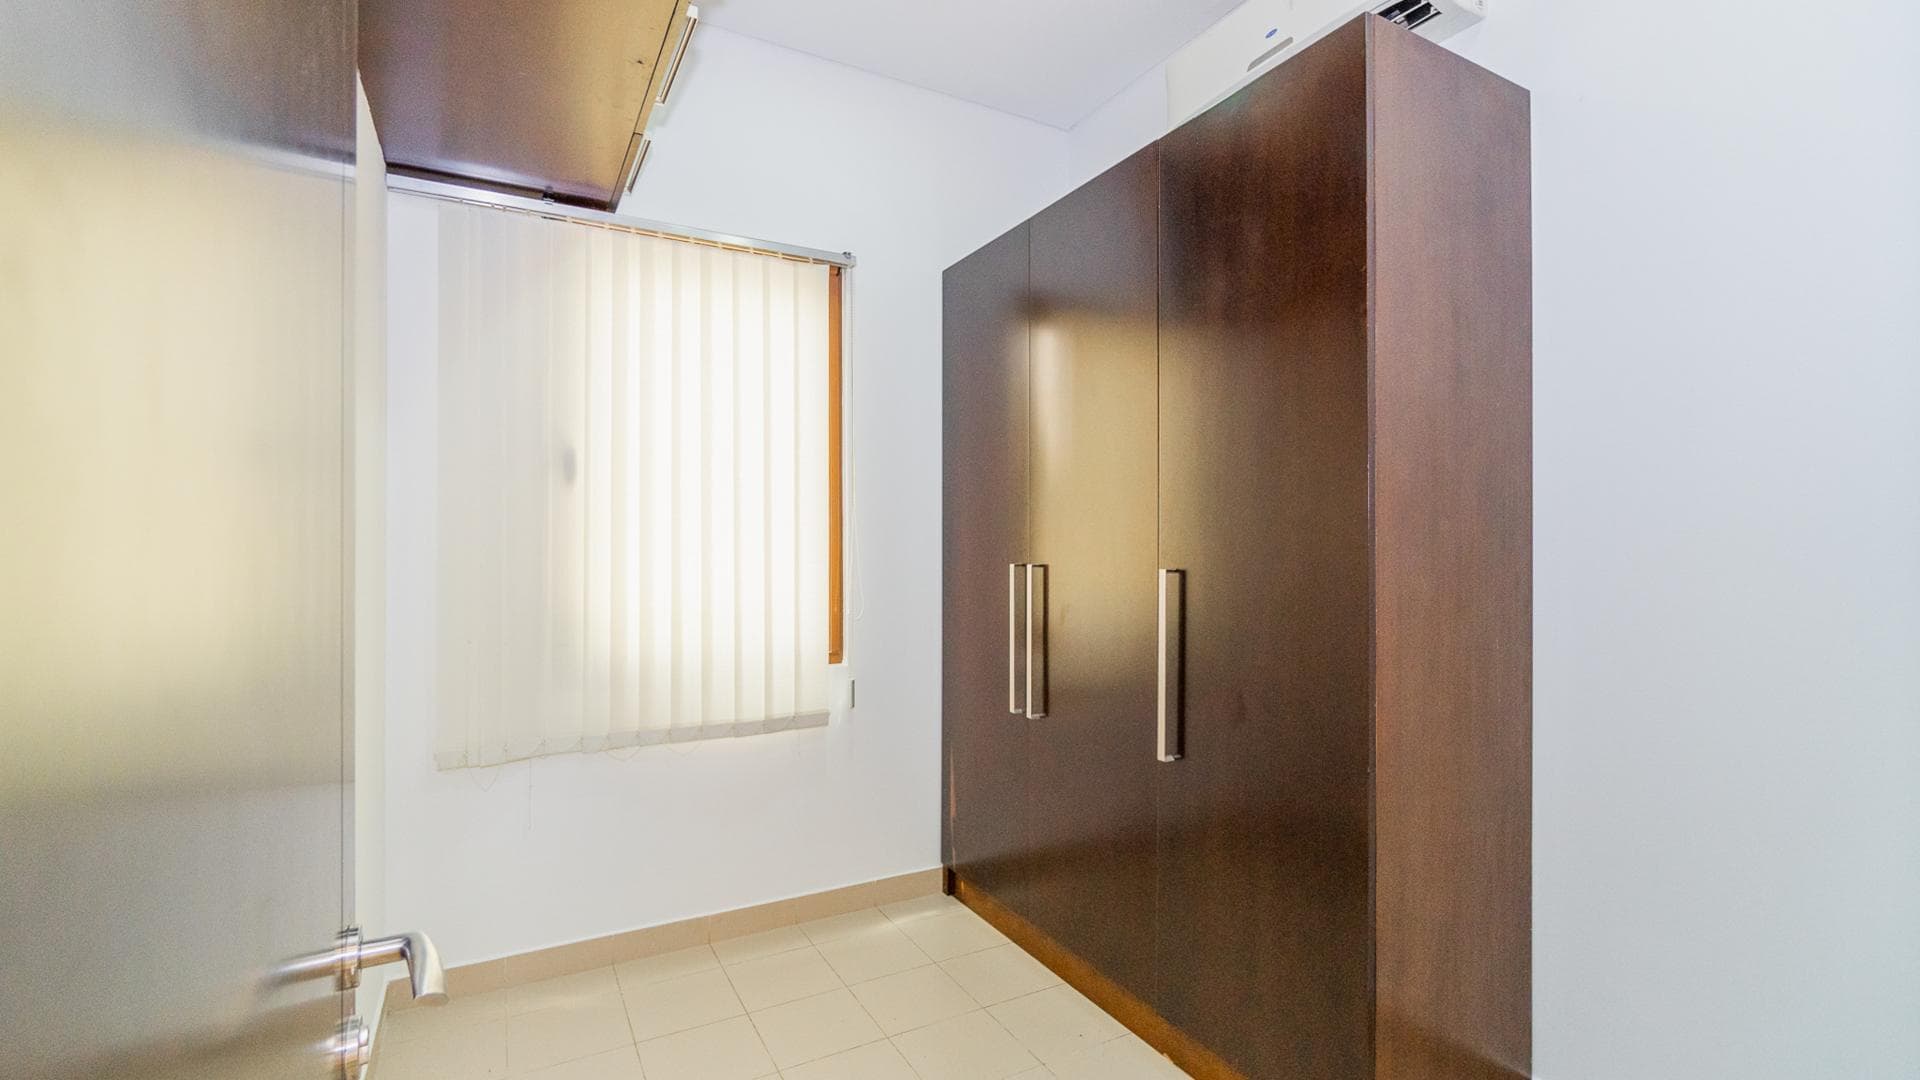 5 Bedroom Villa For Rent Meydan Gated Community Lp13586 F92e73a35038a00.jpg